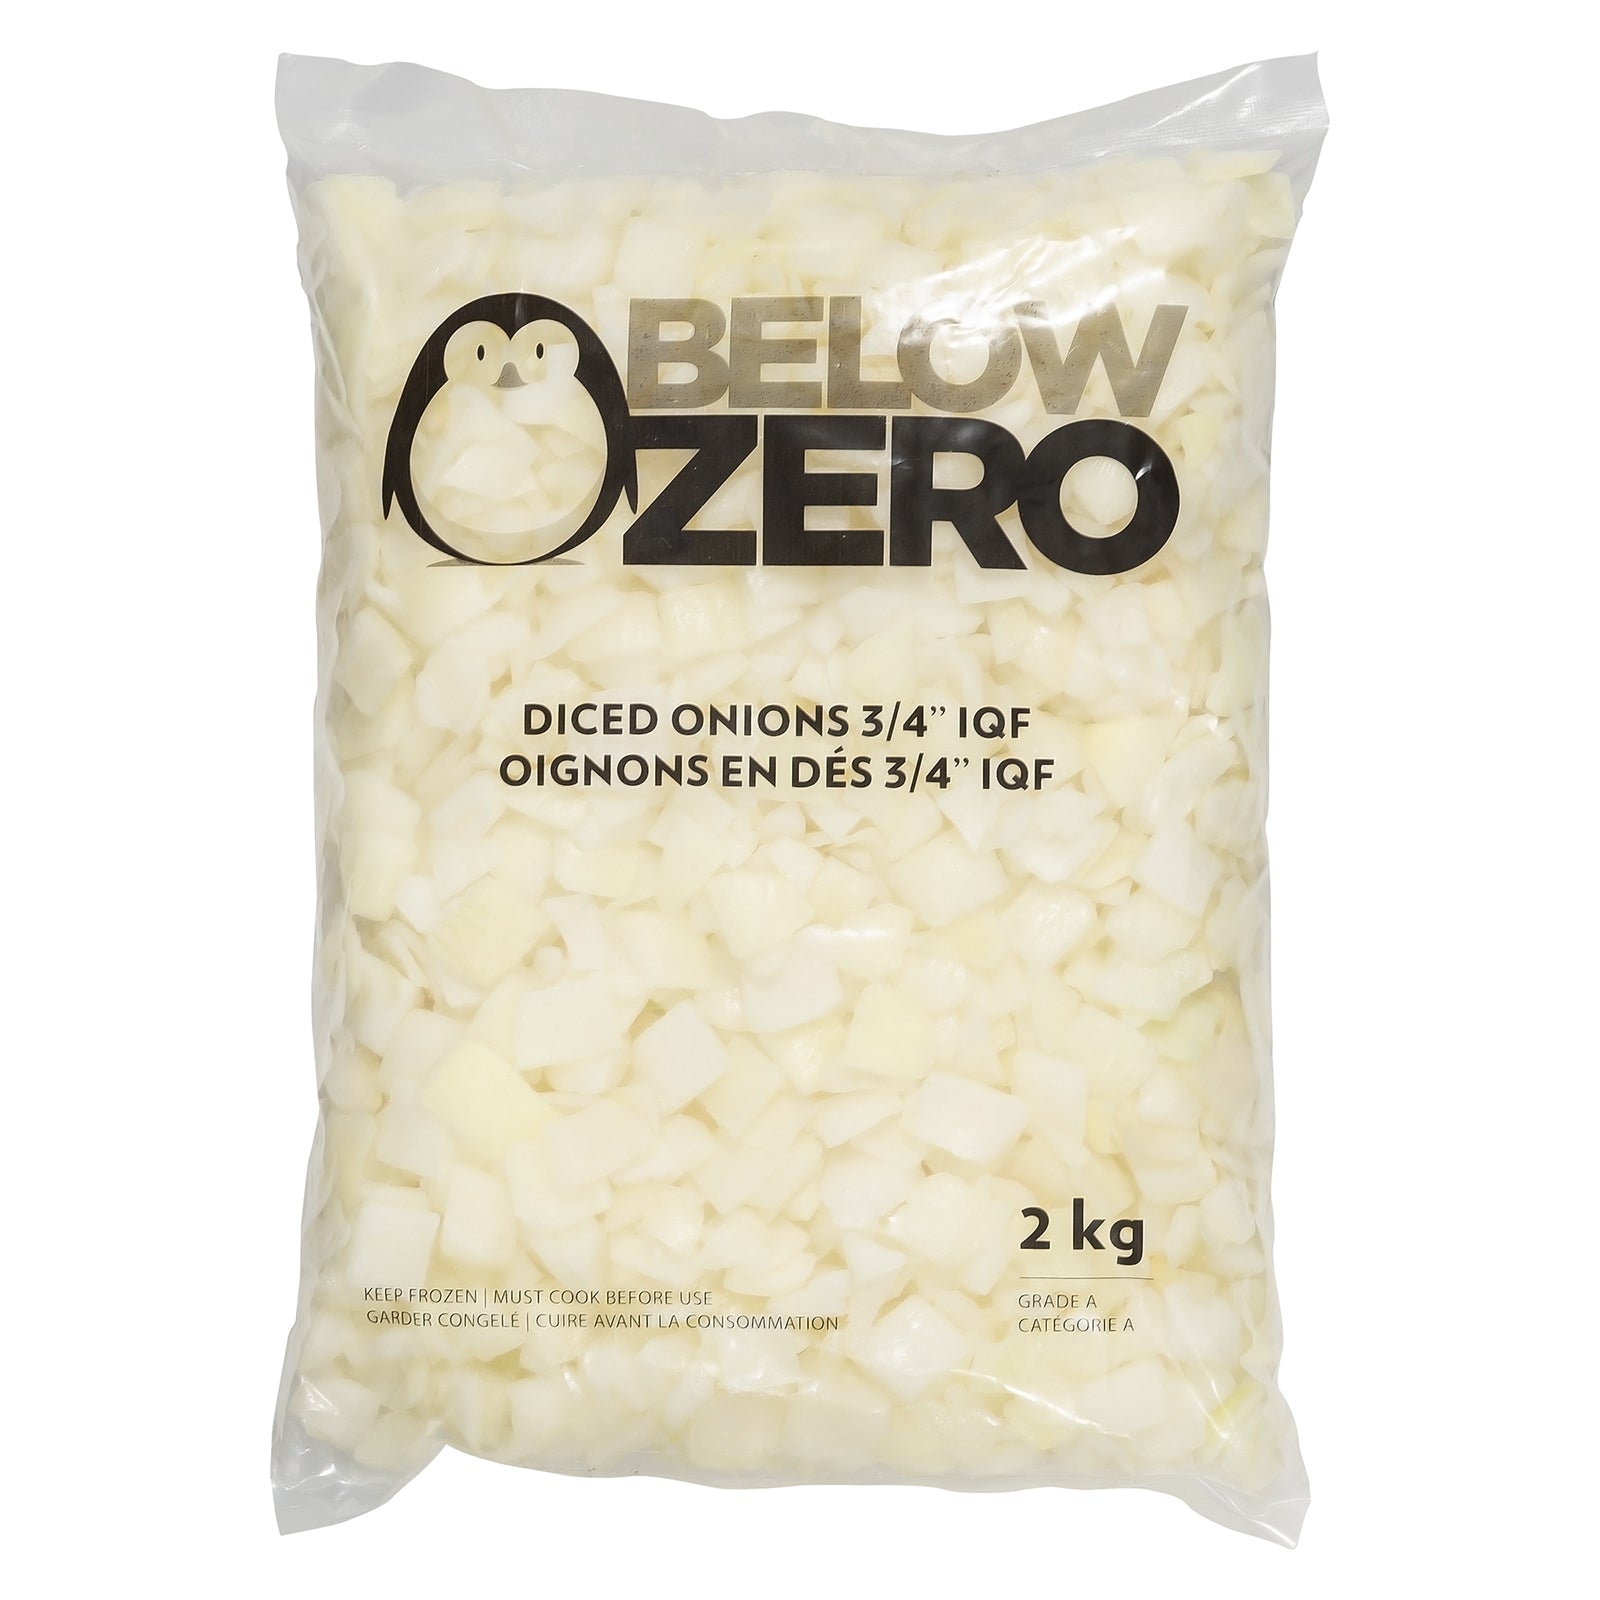 BELOW ZERO Onions Diced 3/4''